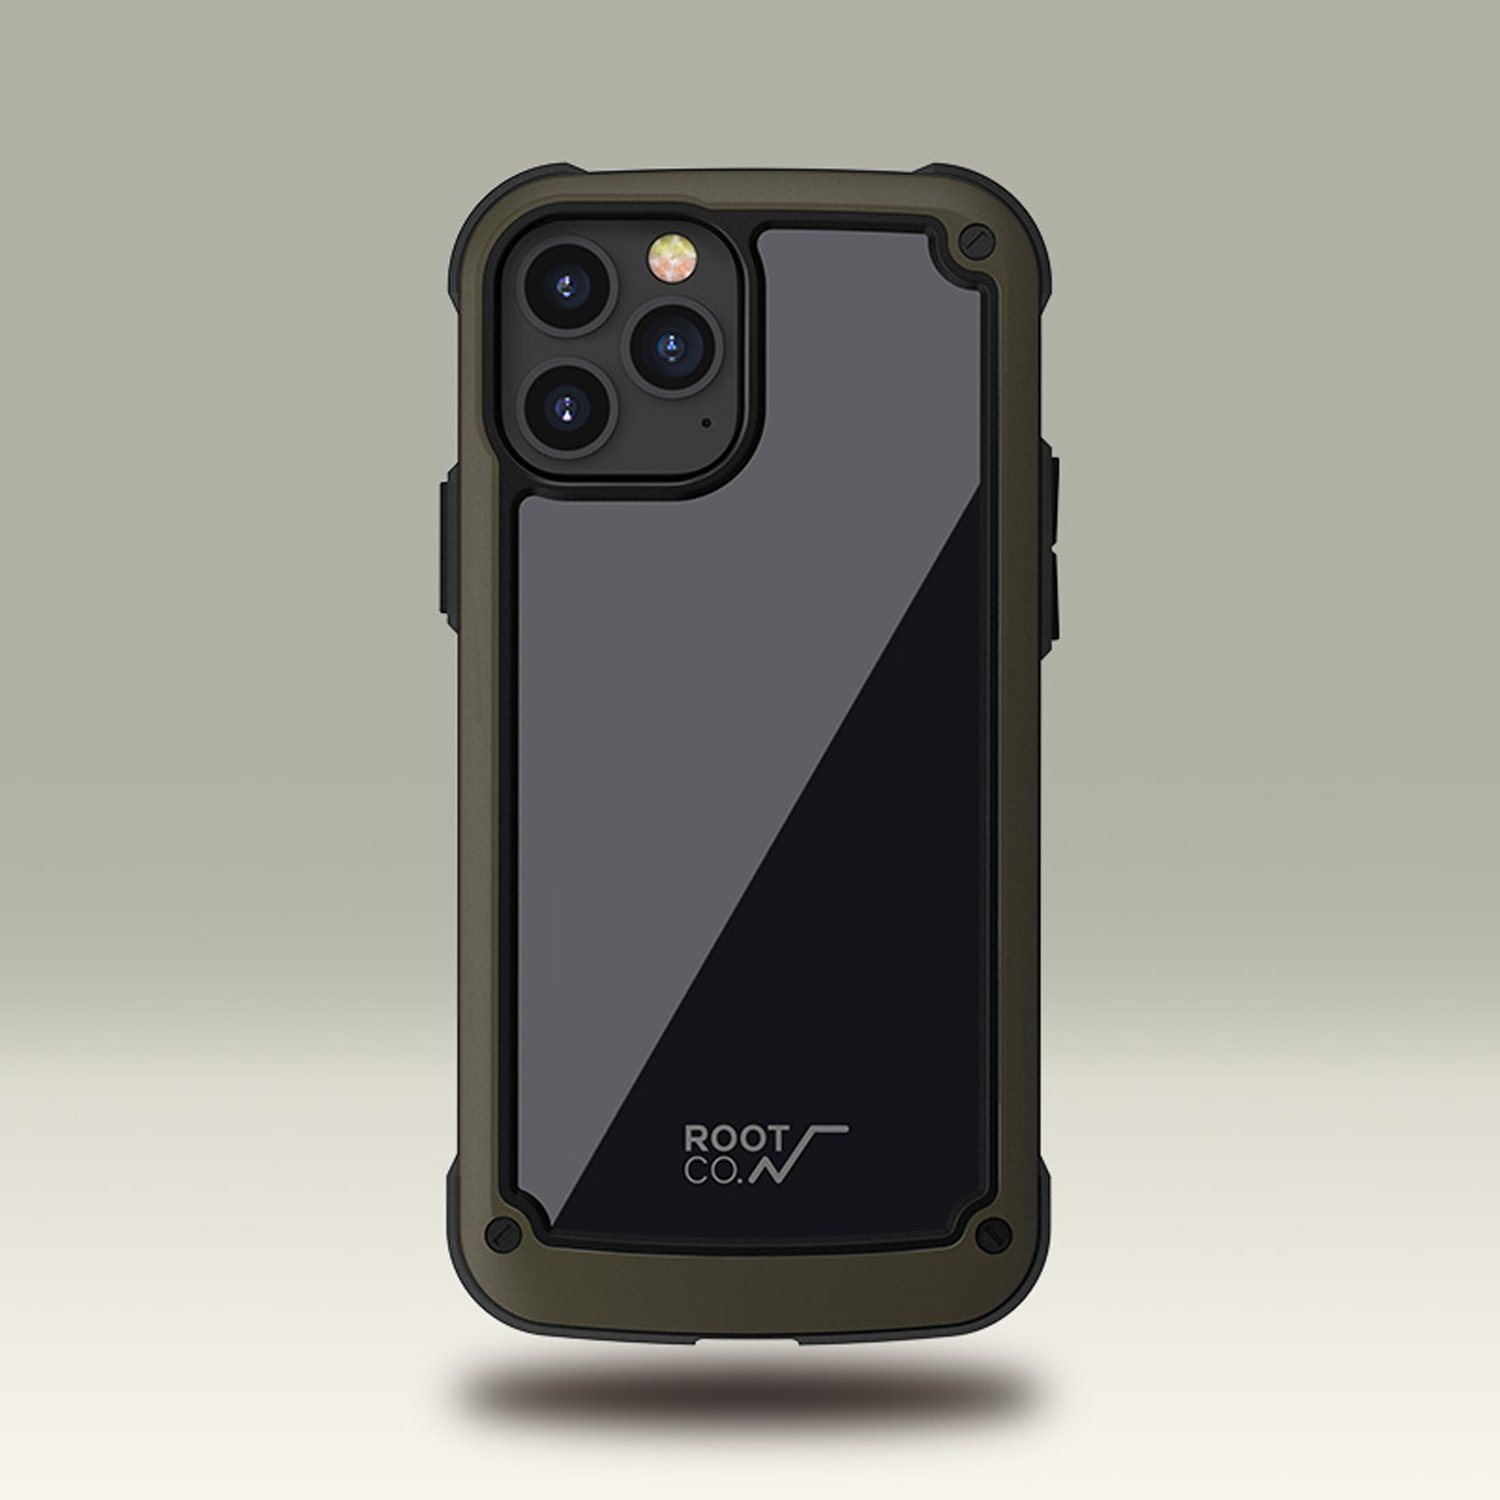 ROOT CO. Gravity Shock Resist Tough & Basic Case for iPhone 12/12 Pro 6.1"(2020), Khaki Default ROOT CO. 